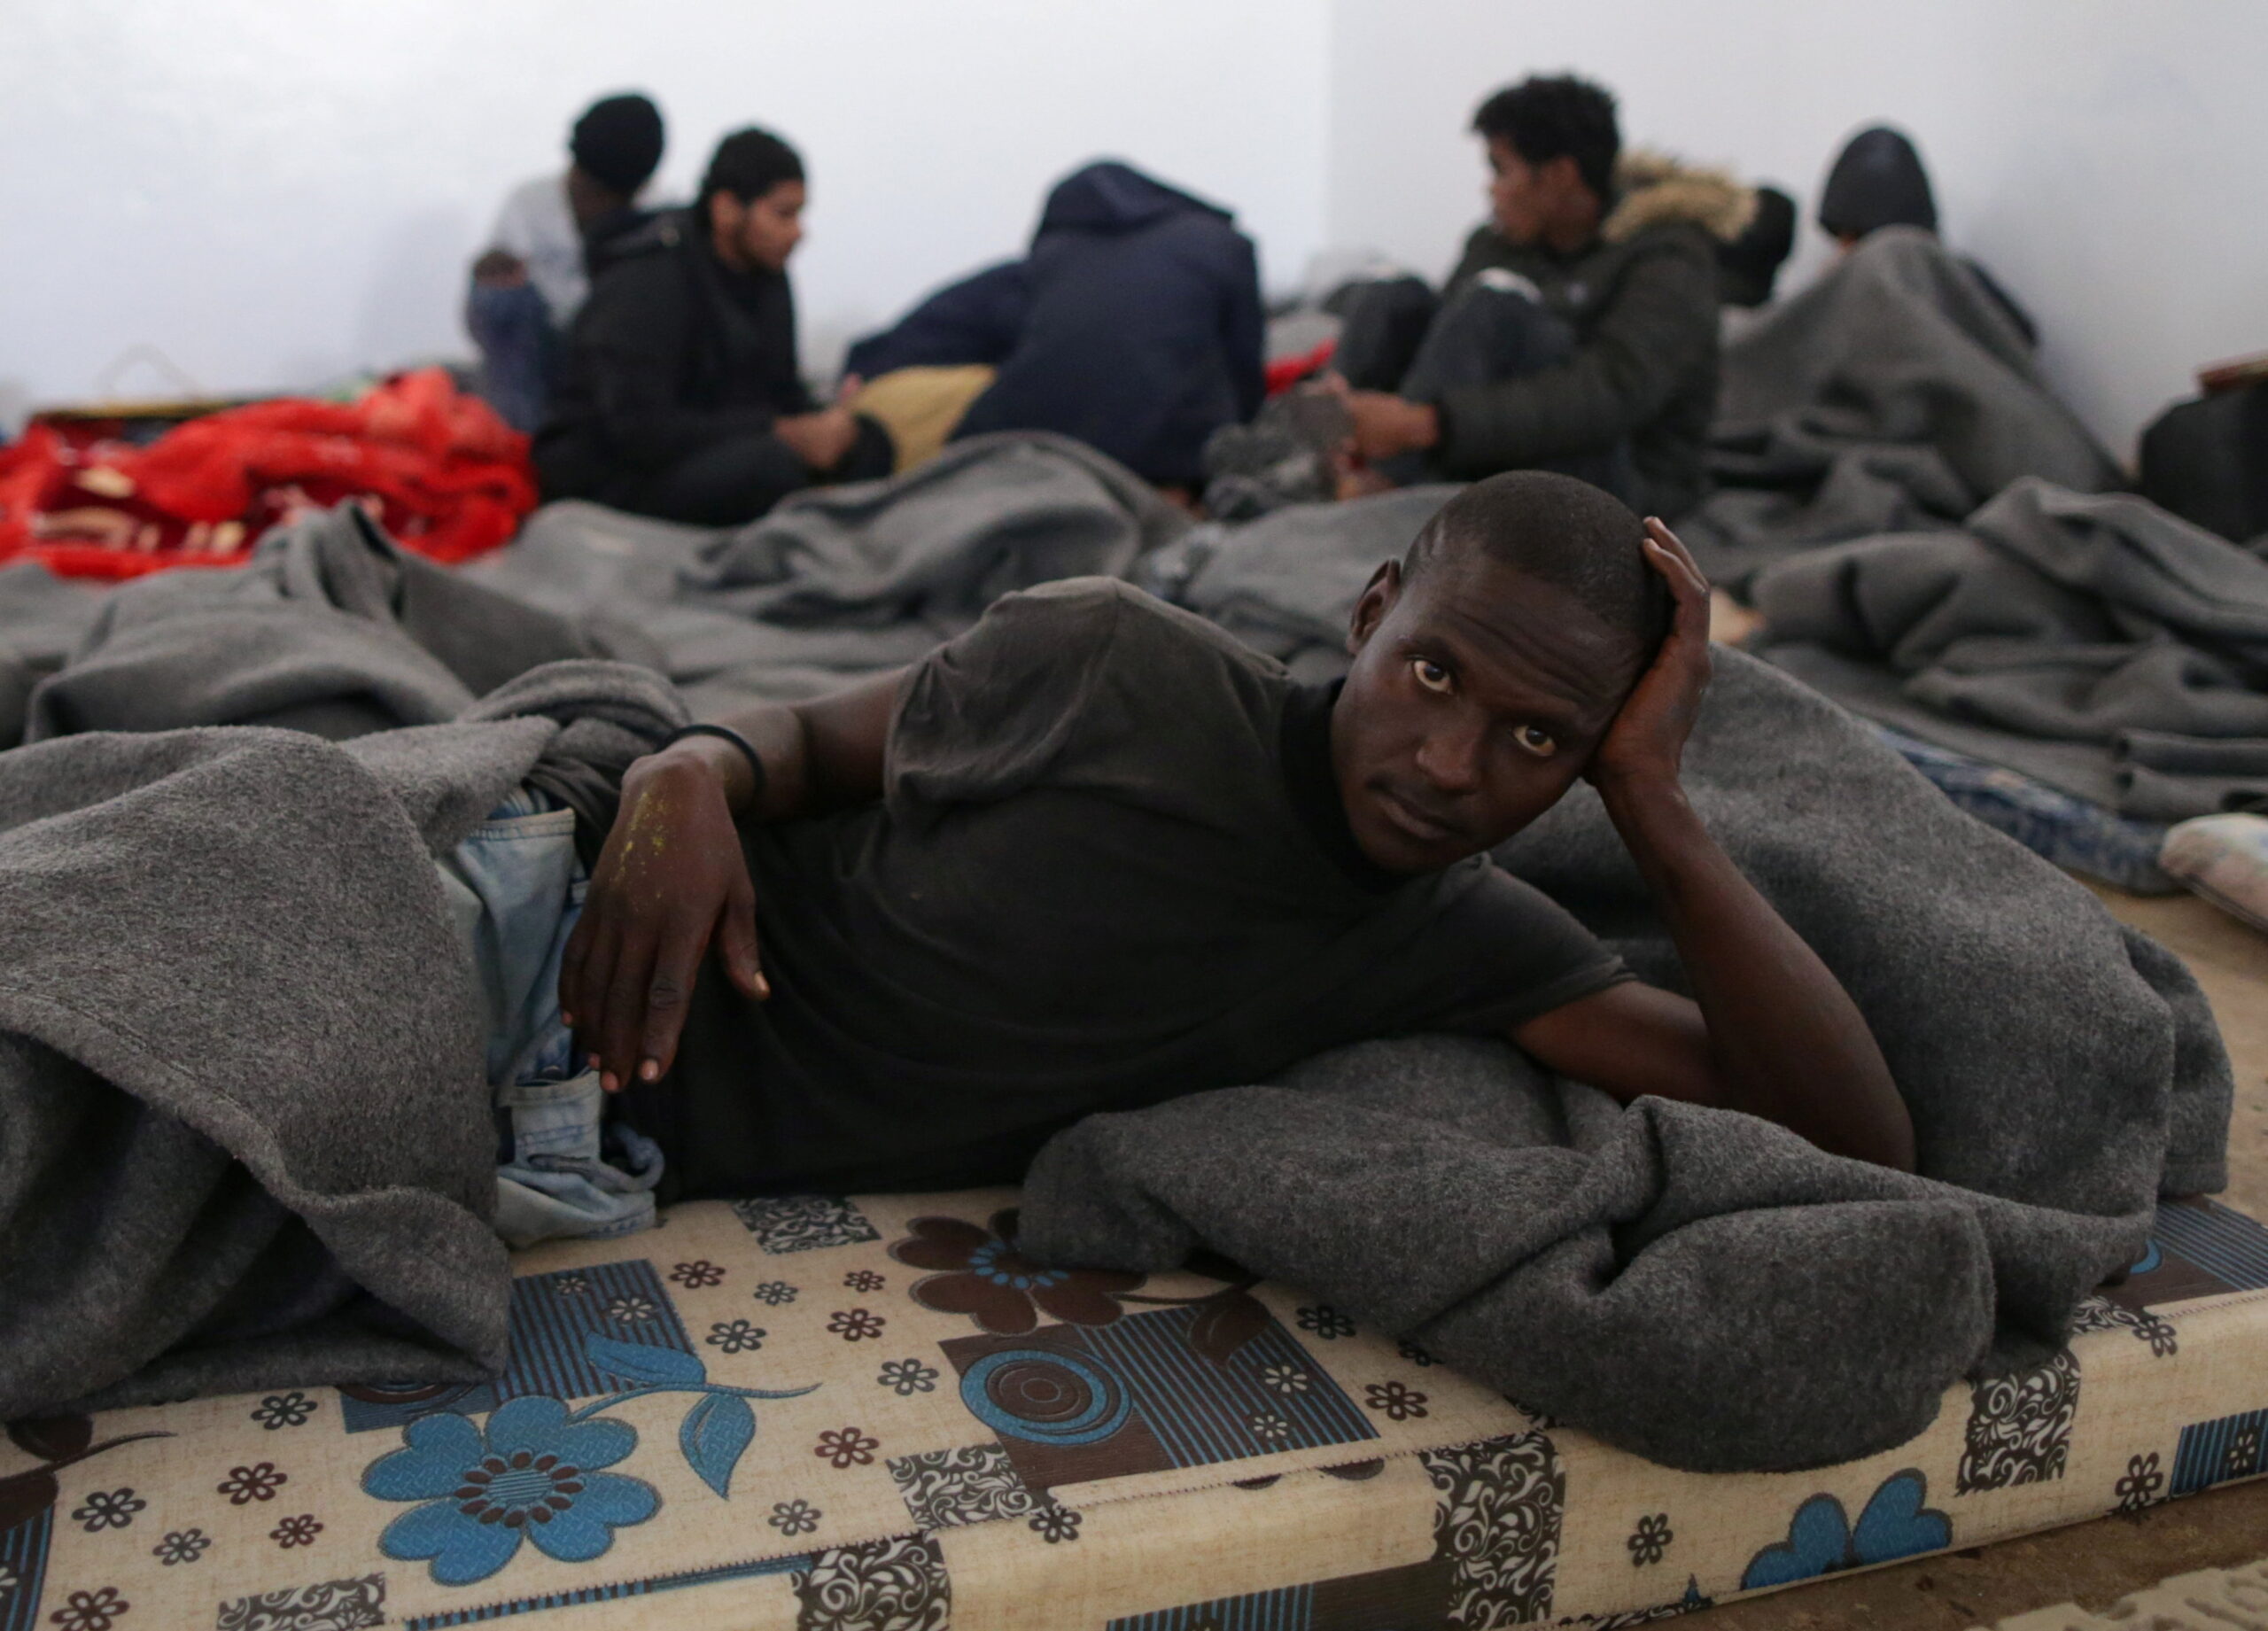 Ciad: varata una legge sui rifugiati